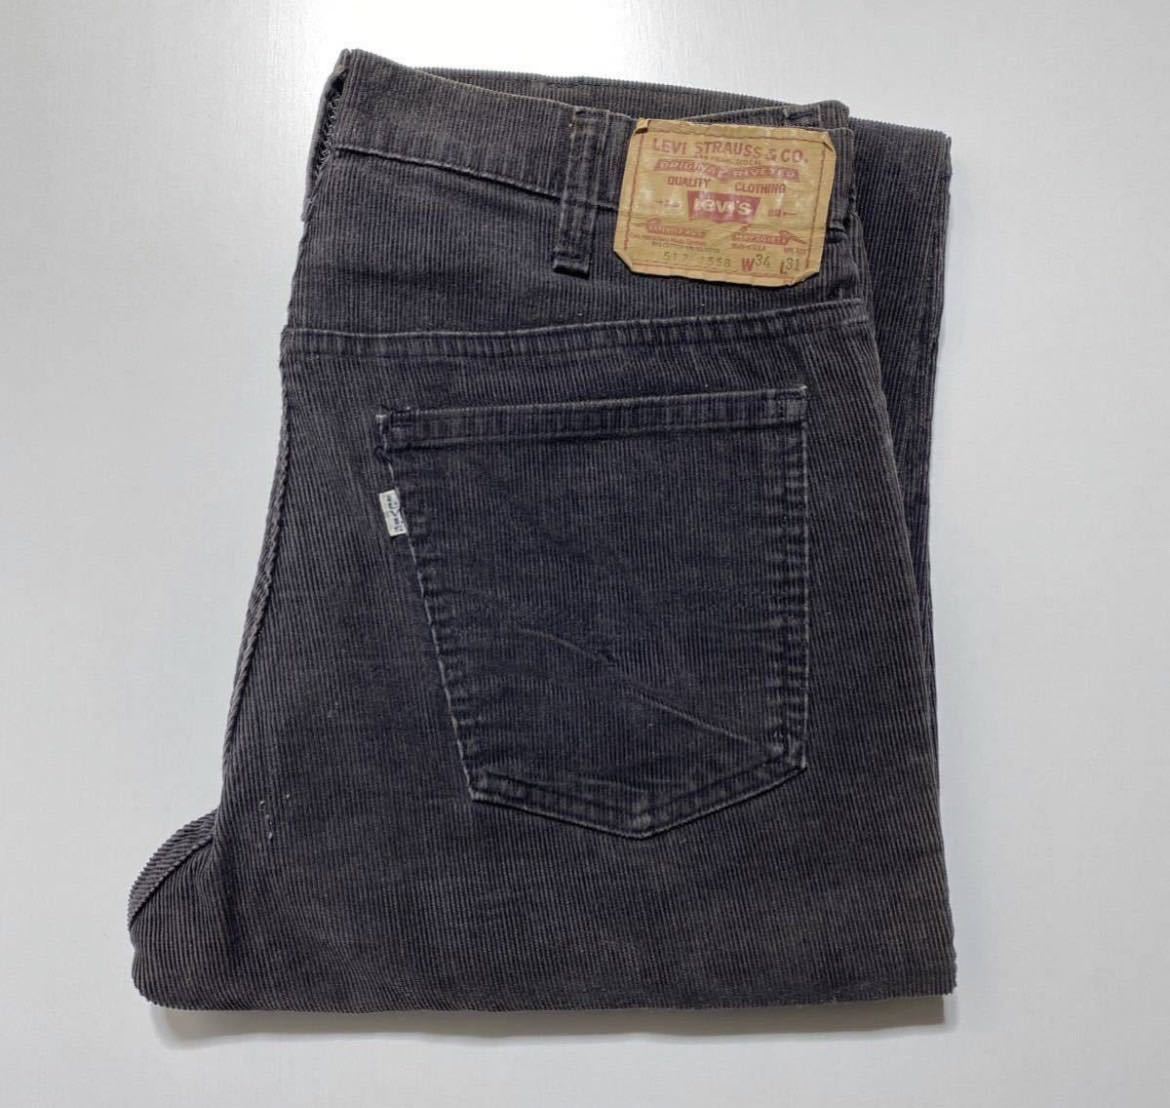 新品同様 80年代 Pants Corduroy 1558 517 Levi's Vintage 【34/31